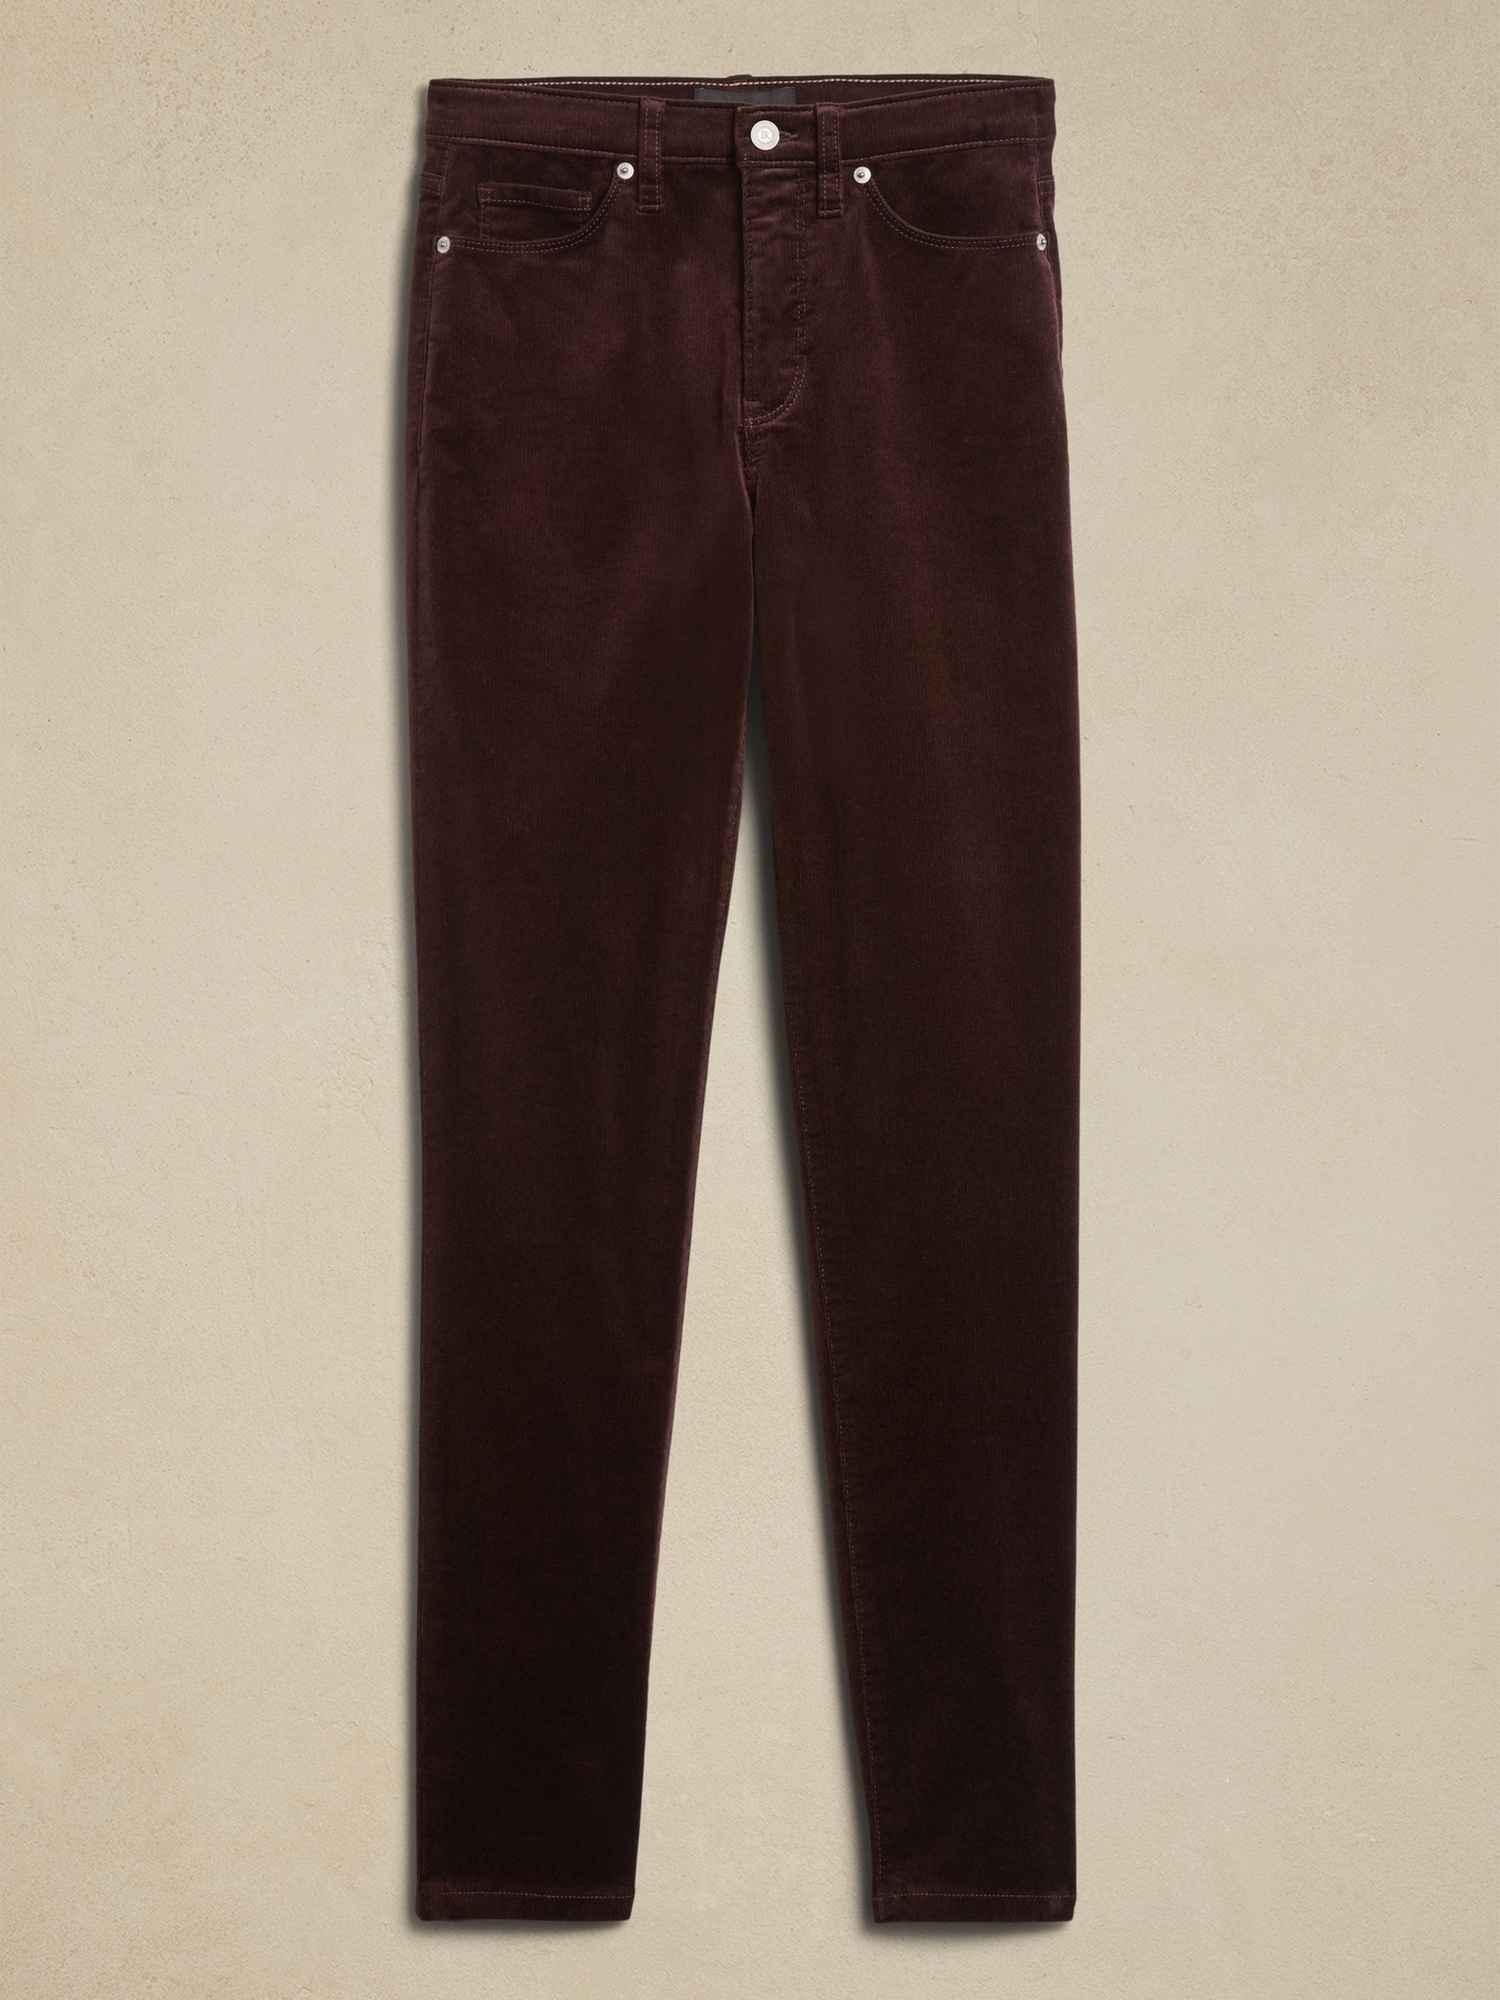 Buy Green Trousers & Pants for Women by AJIO Online | Ajio.com